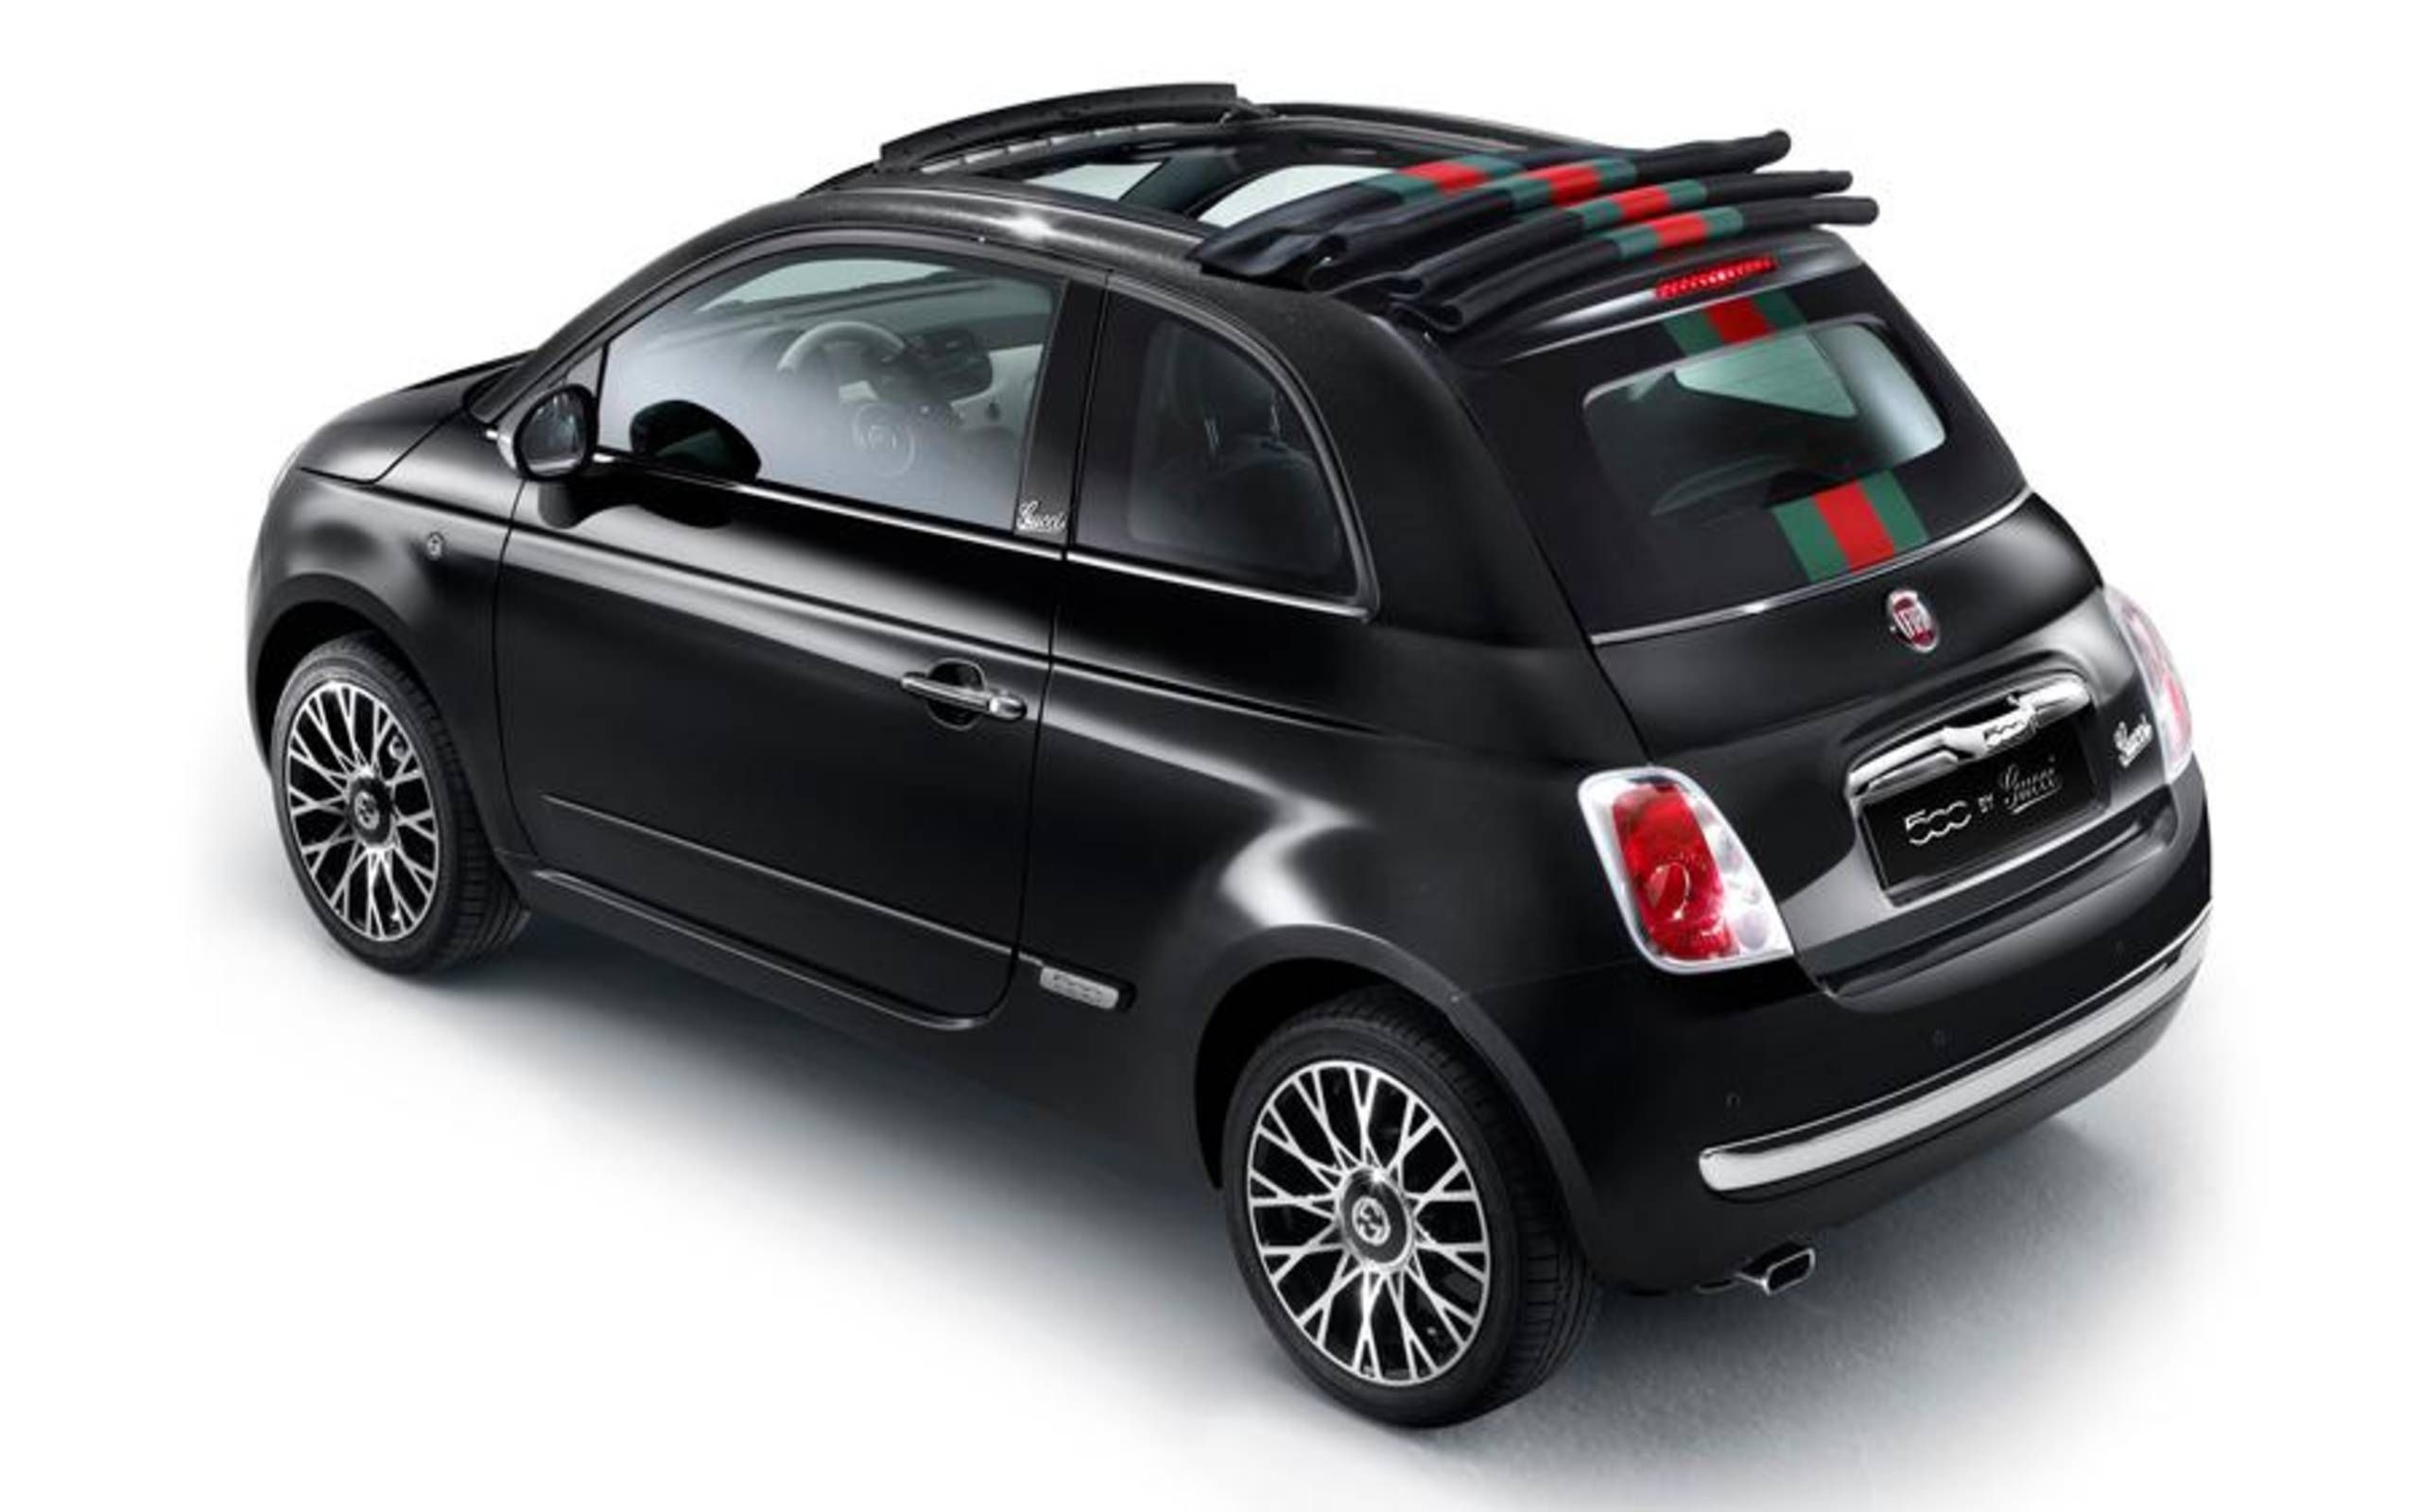 Fiat plans Gucci editions